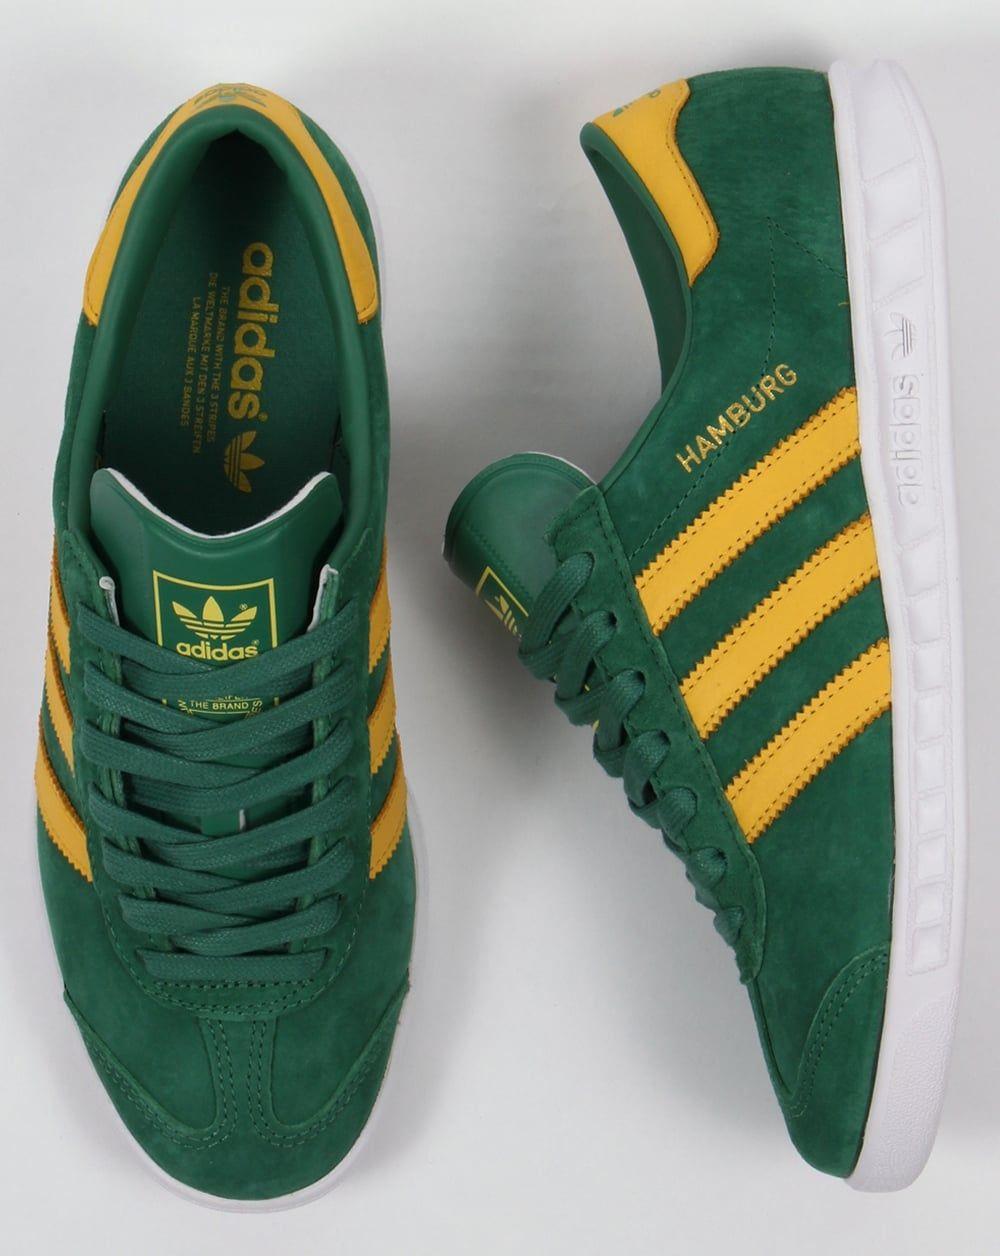 Green Yellow and White Logo - Adidas Hamburg Trainers Green/Yellow/White, originals, shoes, sneakers